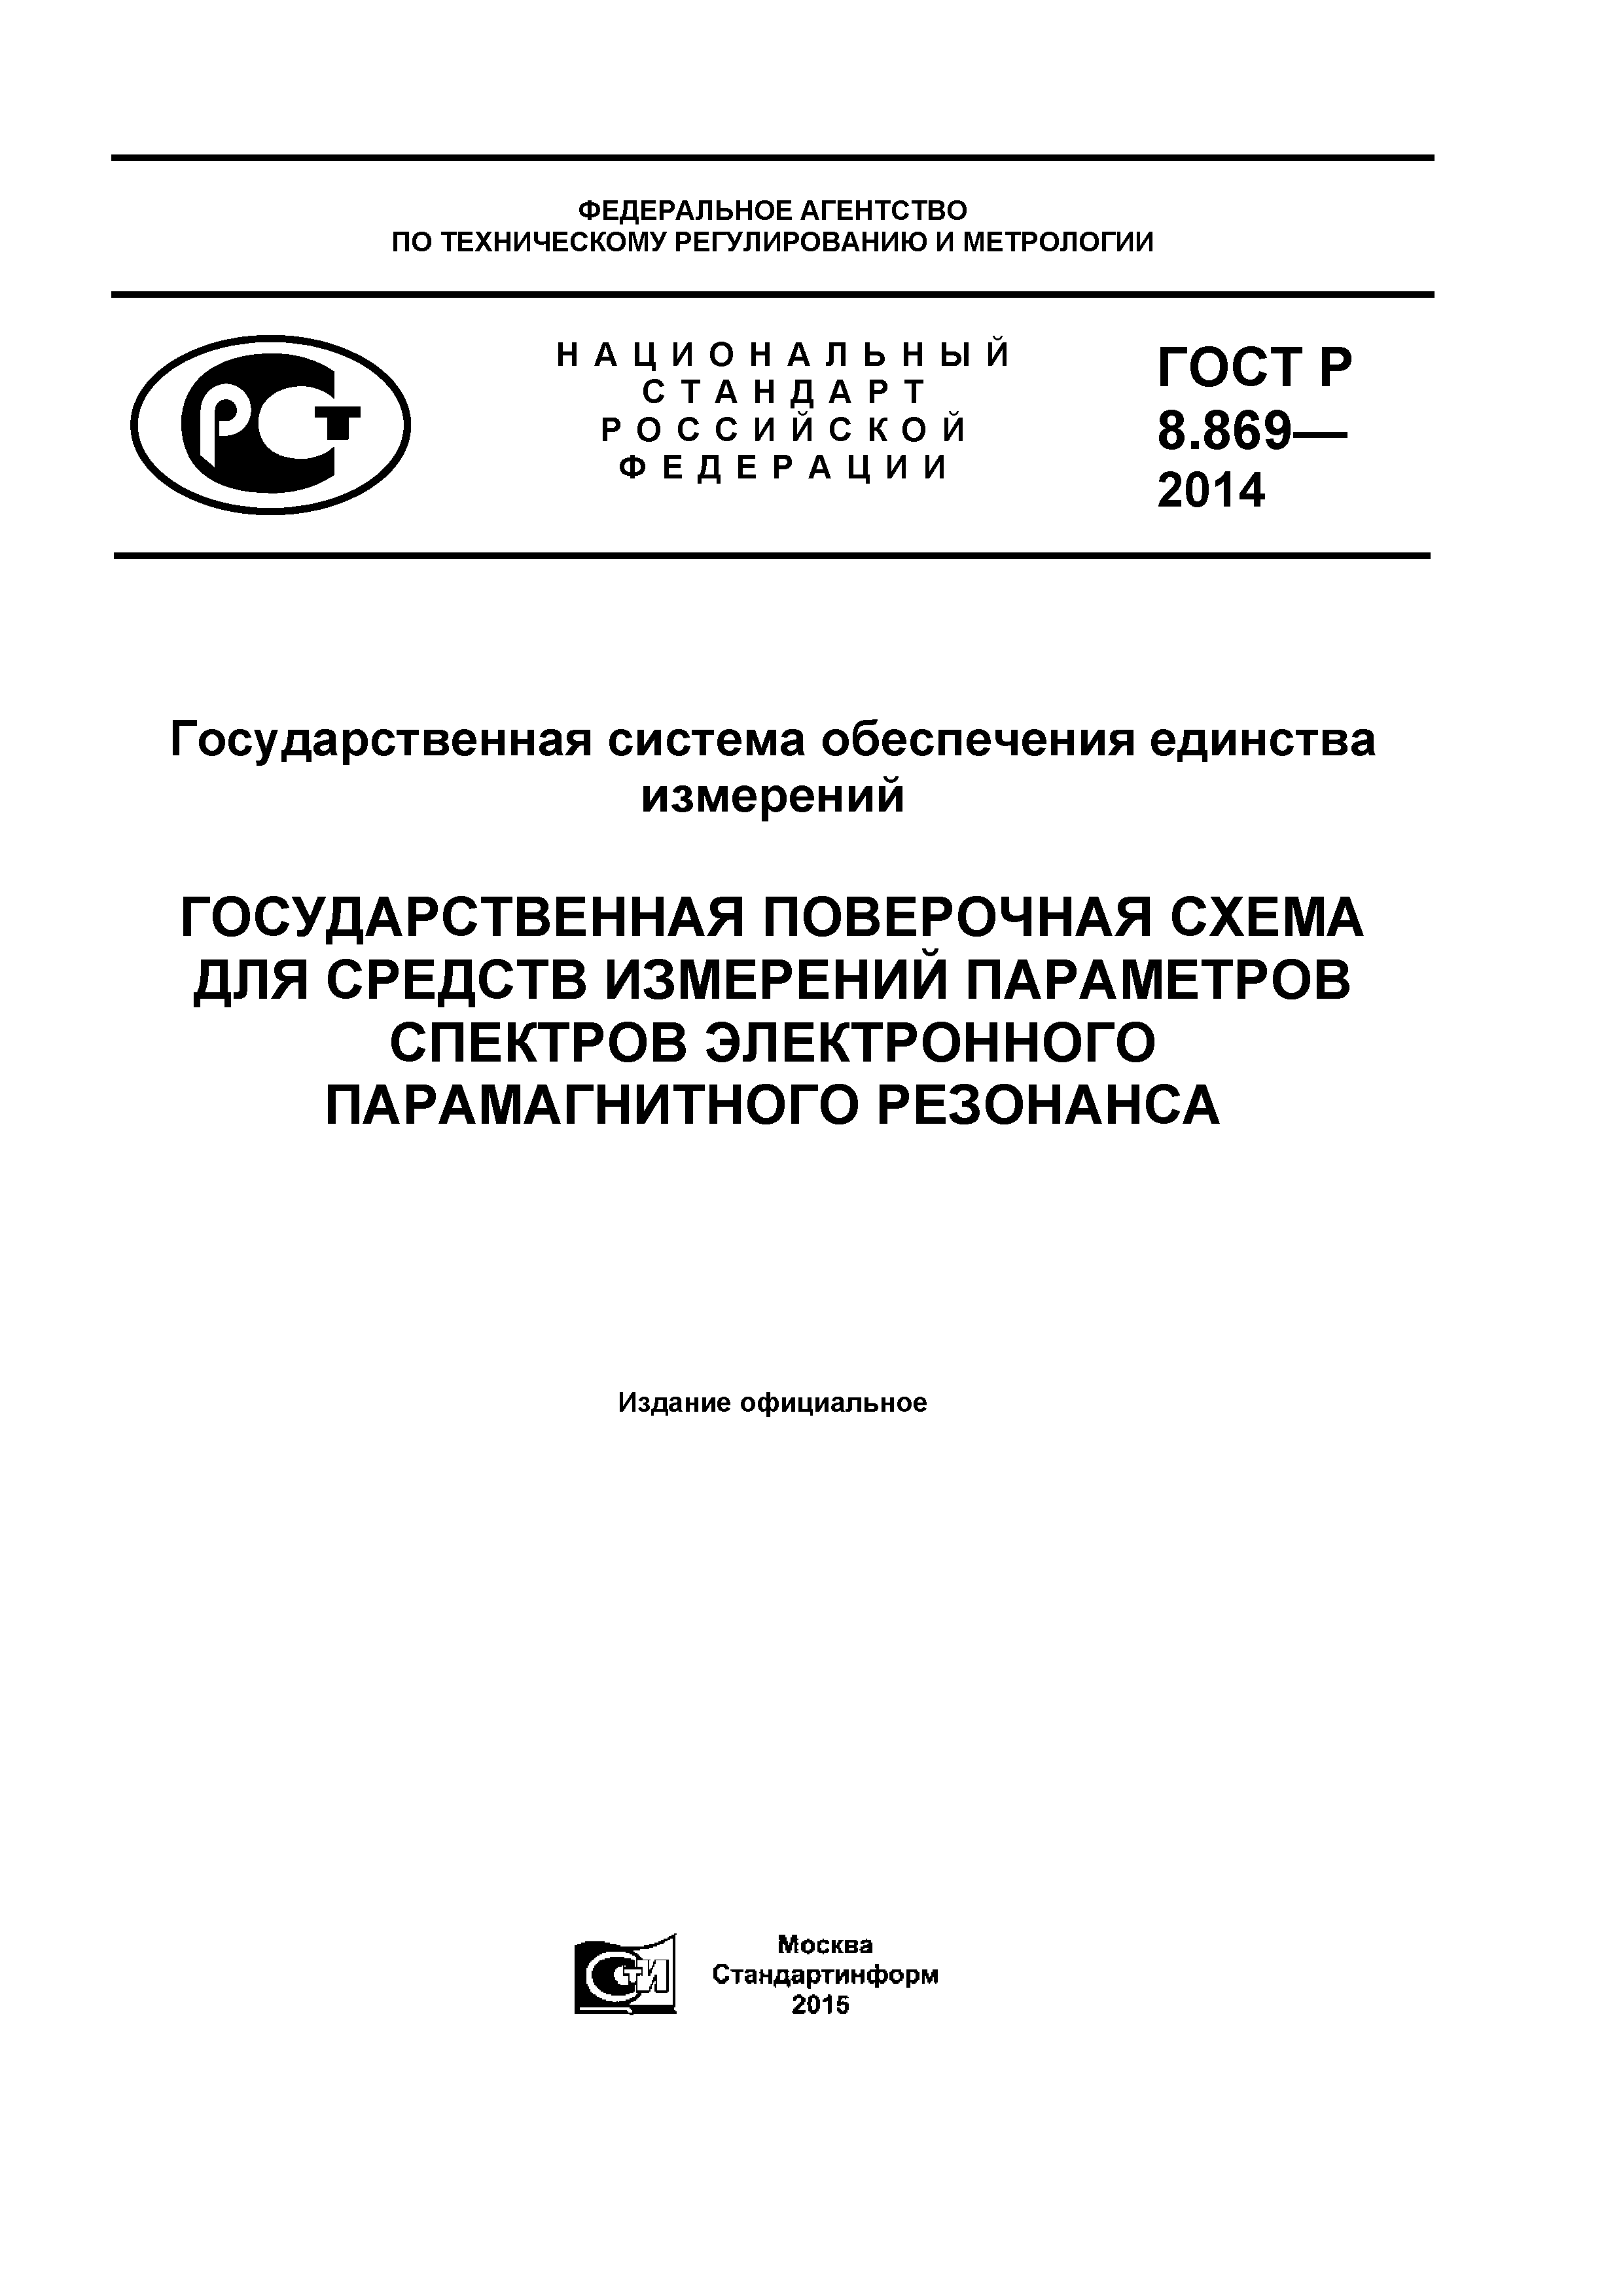 ГОСТ Р 8.869-2014